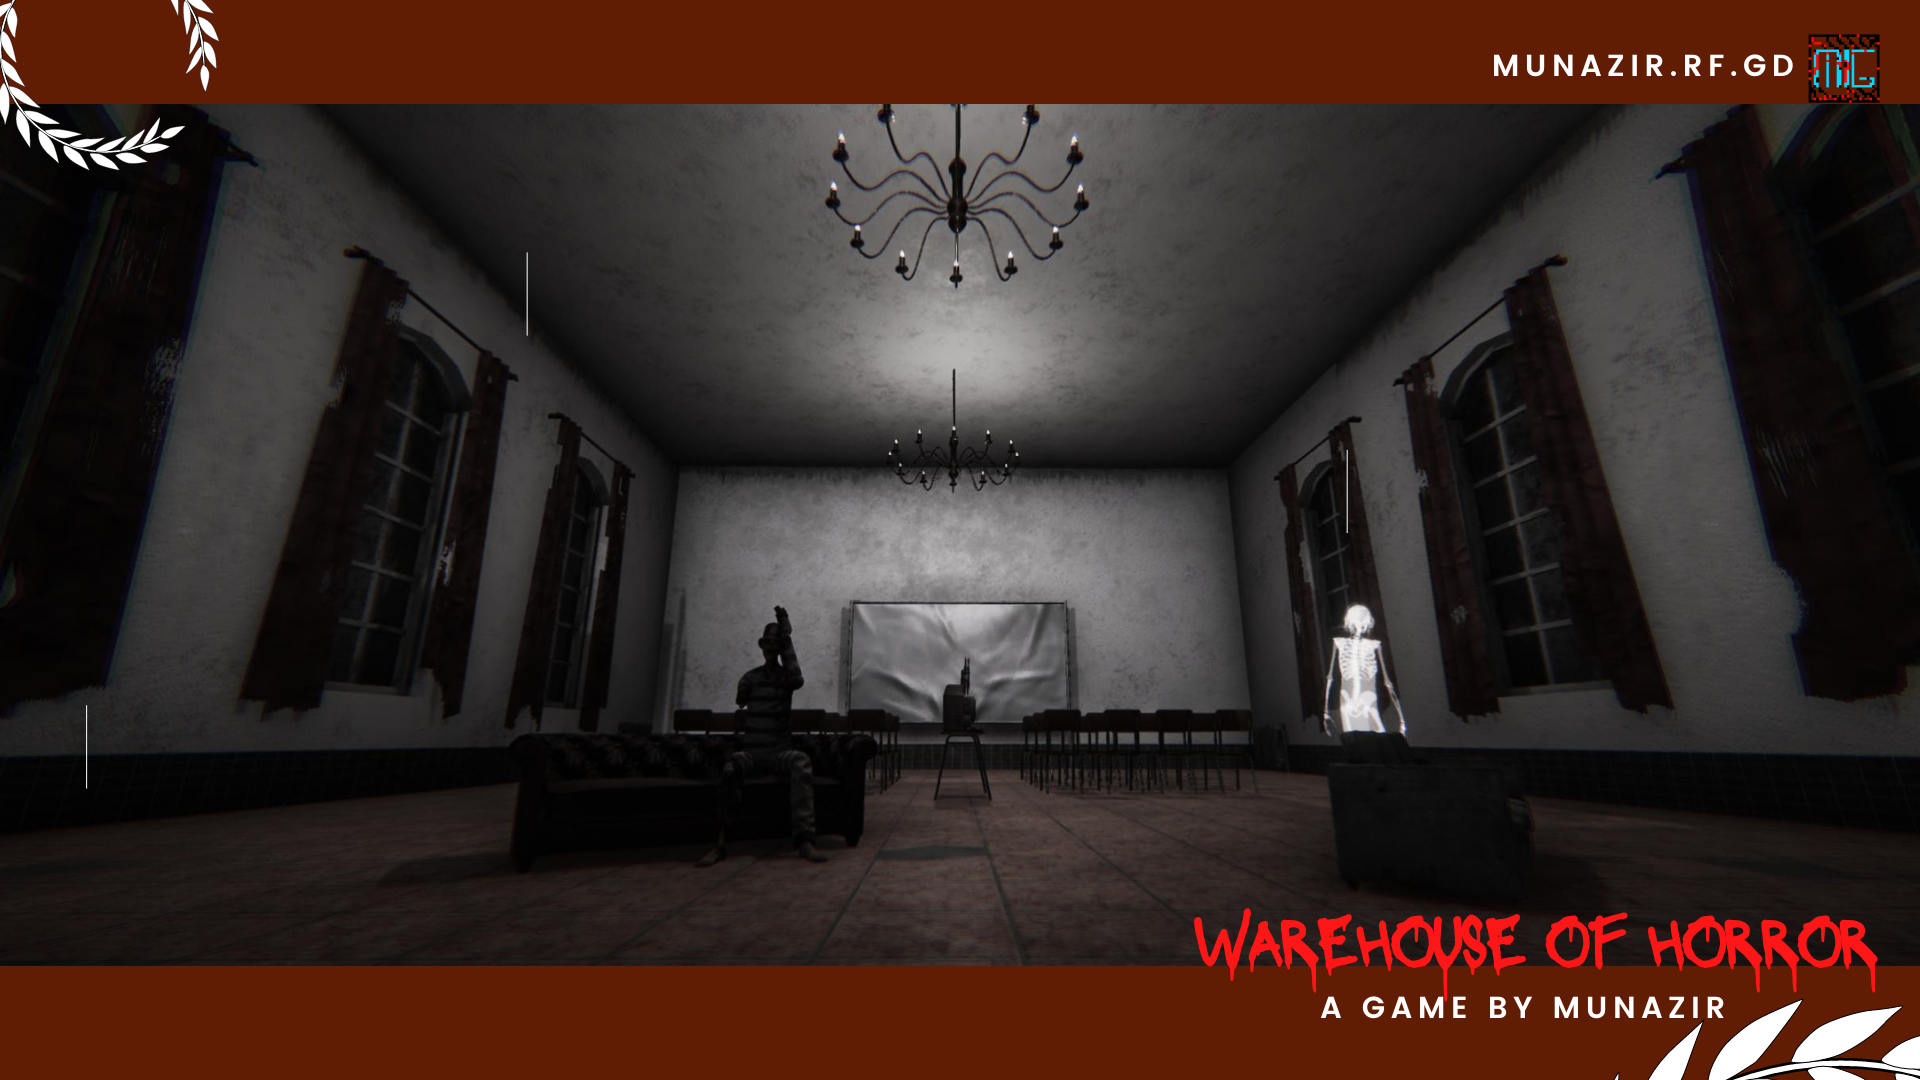 Screenshot of Warehouse of horror